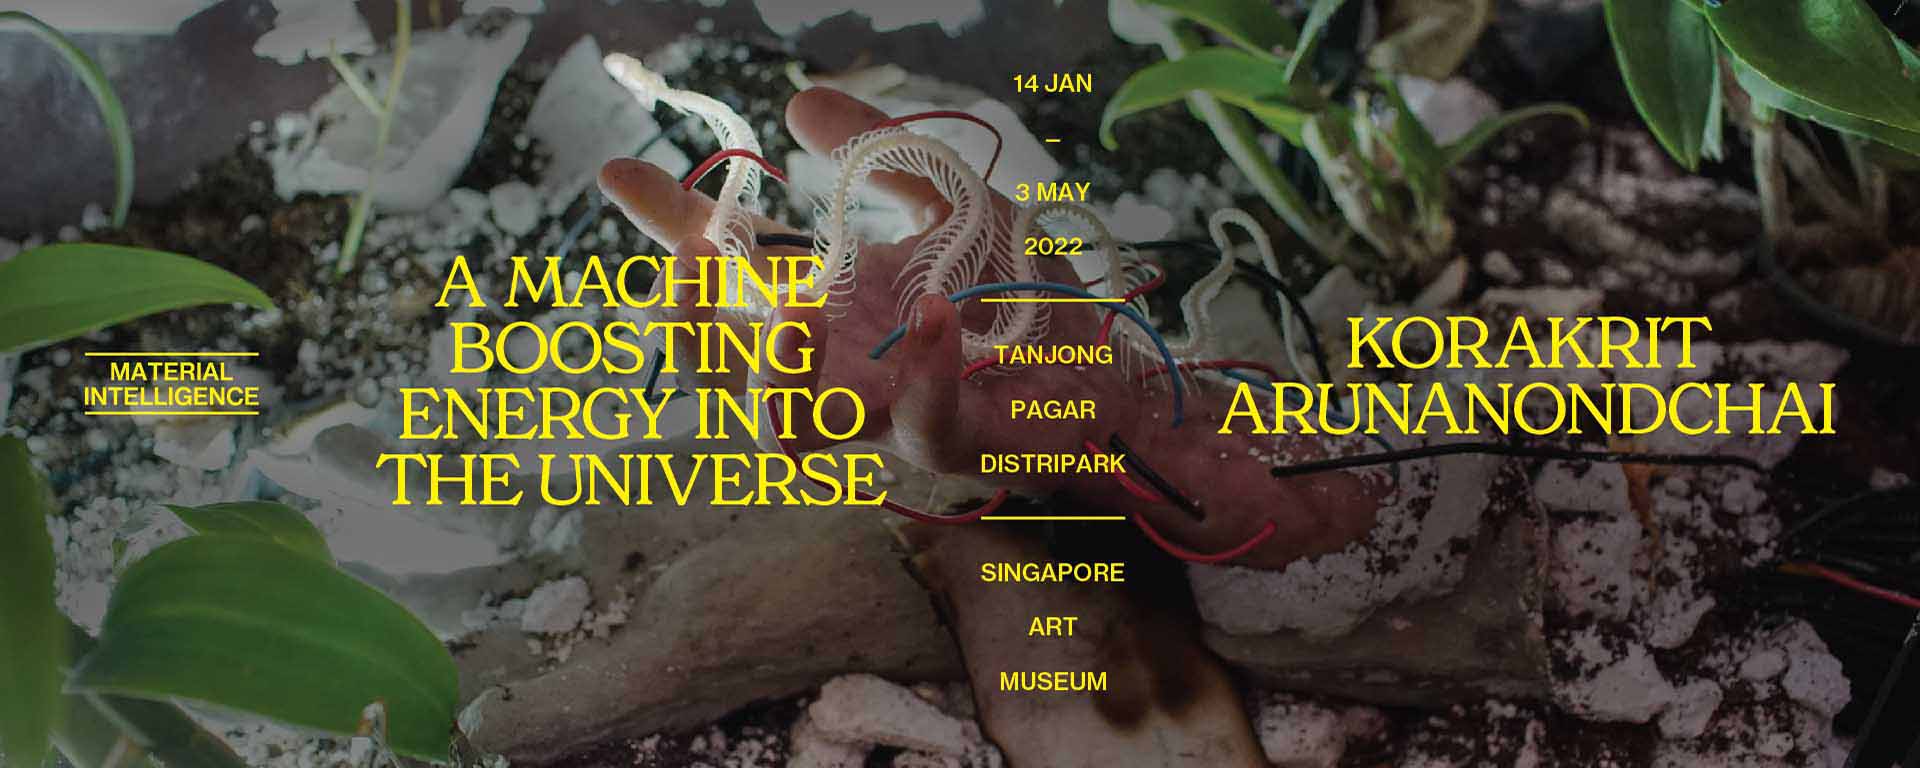 Korakrit Arunanondchai: A Machine Boosting Energy Into the Universe